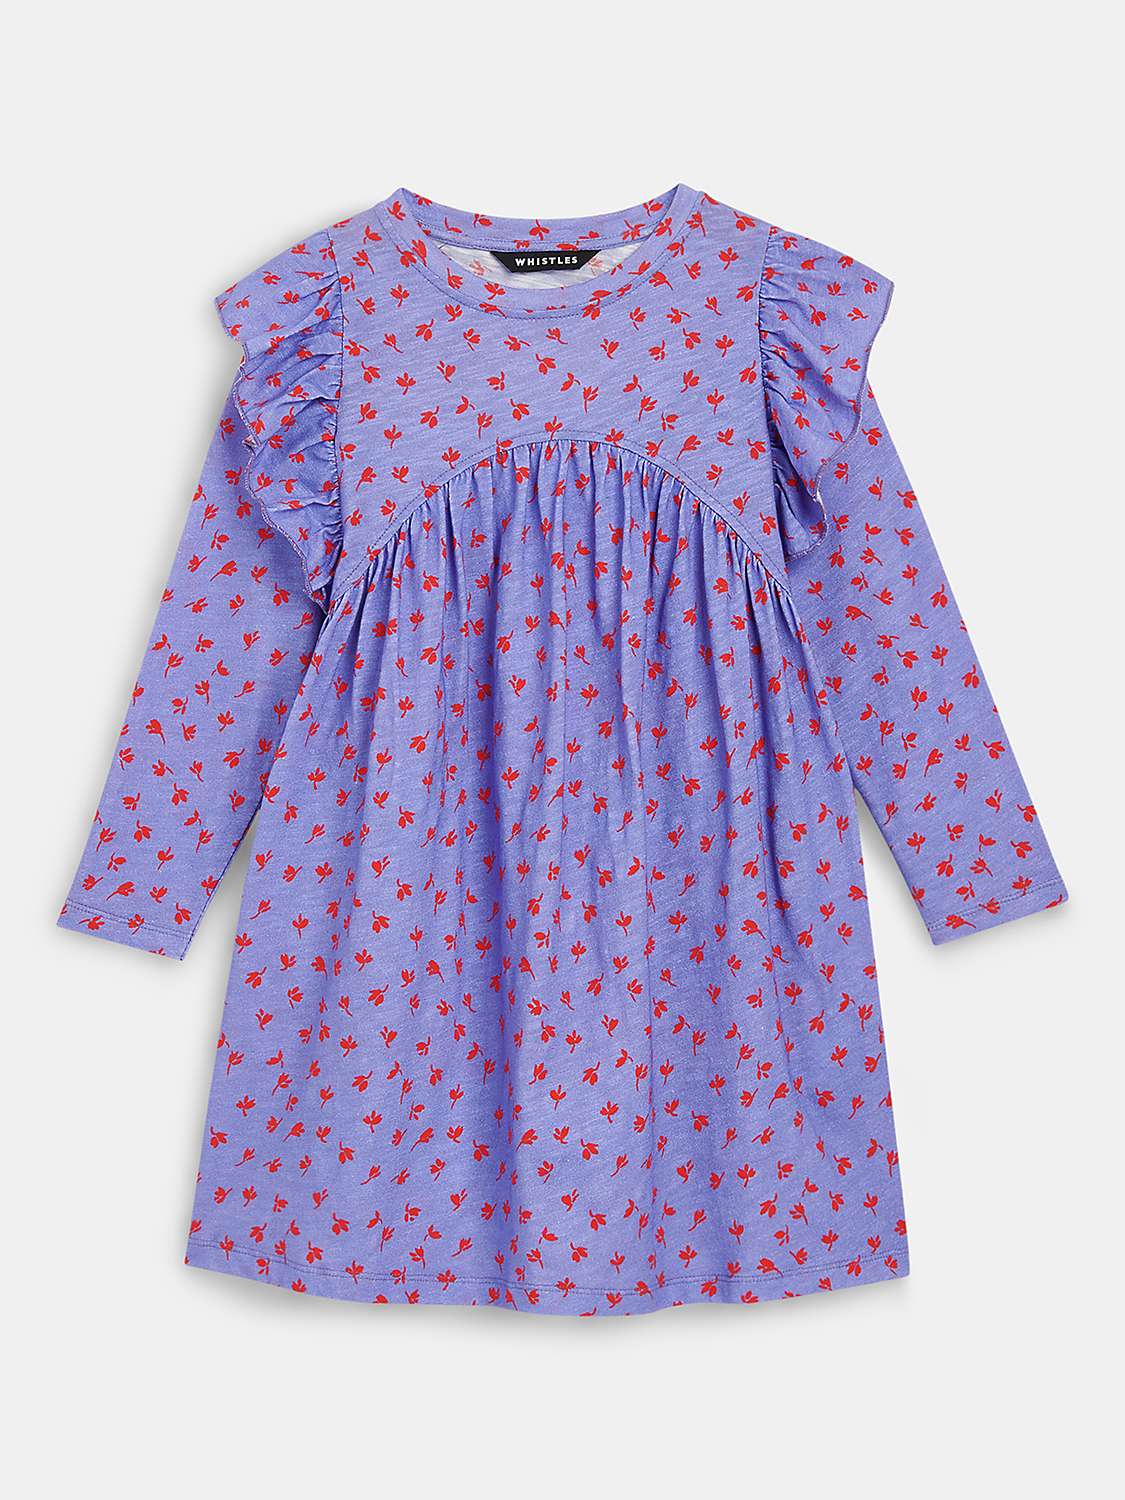 Buy Whistles Kids' Scattered Petal Print Dress, Purple/Red Online at johnlewis.com